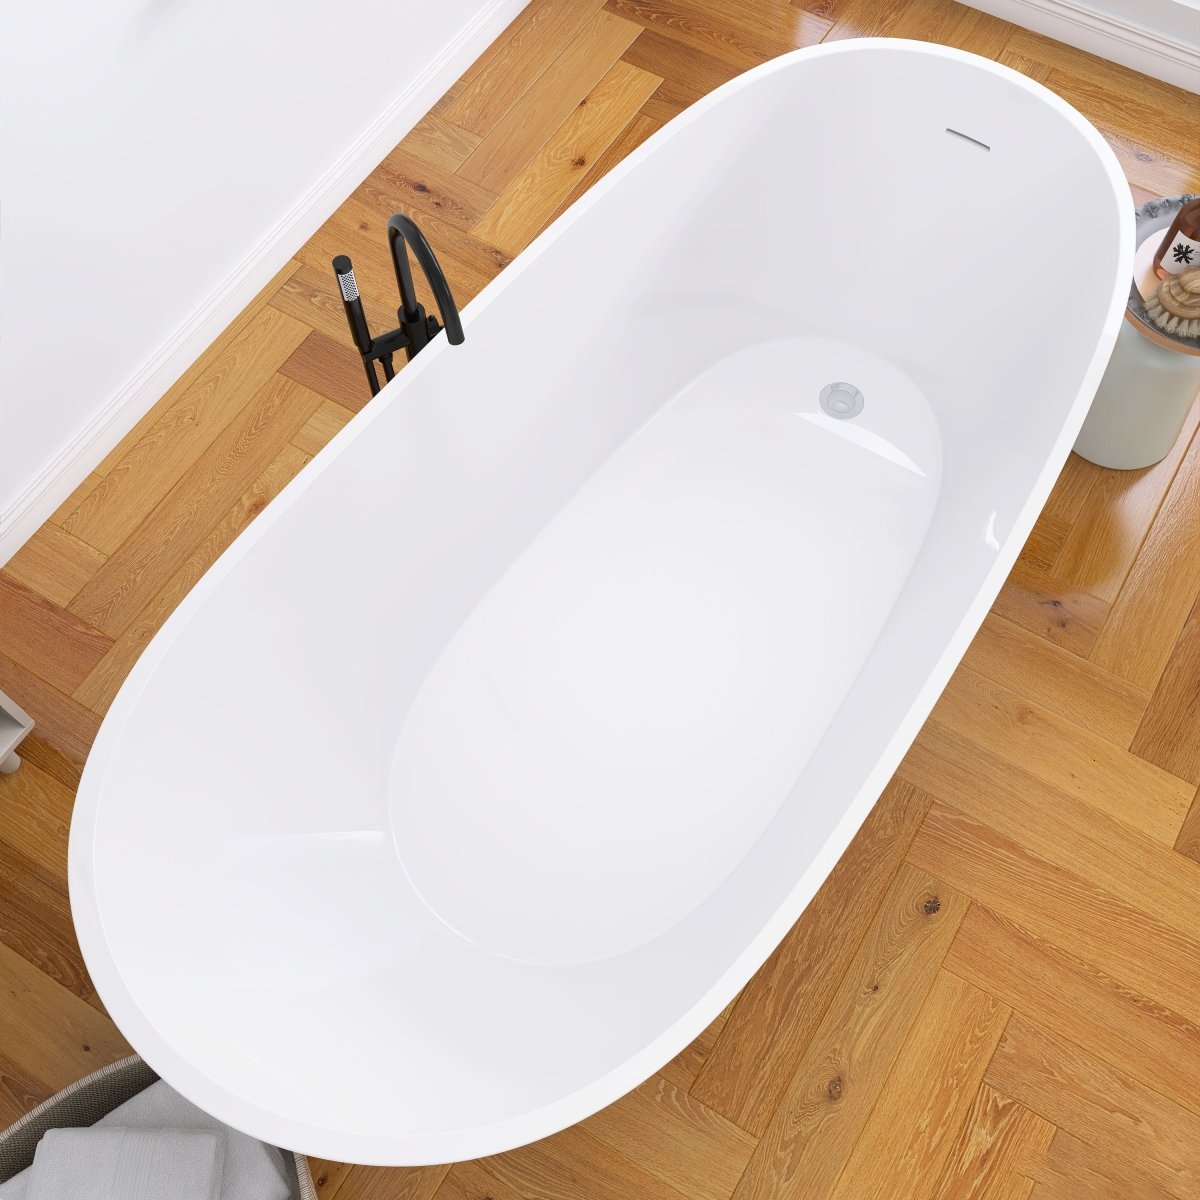 ExBrite Bathtub 67" Acrylic Free Standing Tub Classic Oval Shape Soaking Tub, Adjustable Freestanding Gloss White - ExBriteUSA